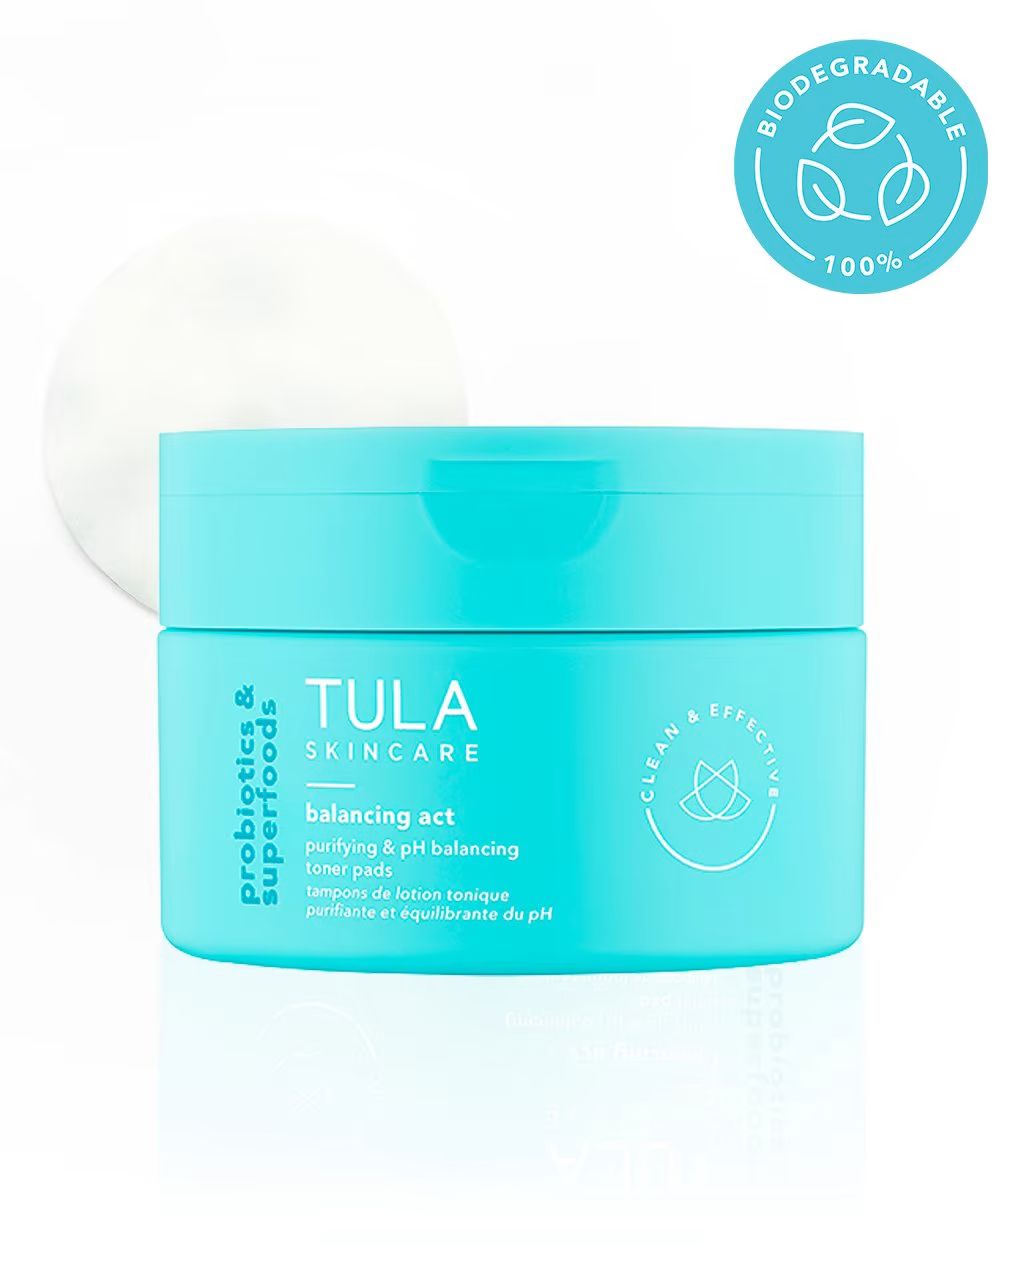 Balancing Act Purifying & pH Balancing Toner Pads | TULA Skincare | Tula Skincare